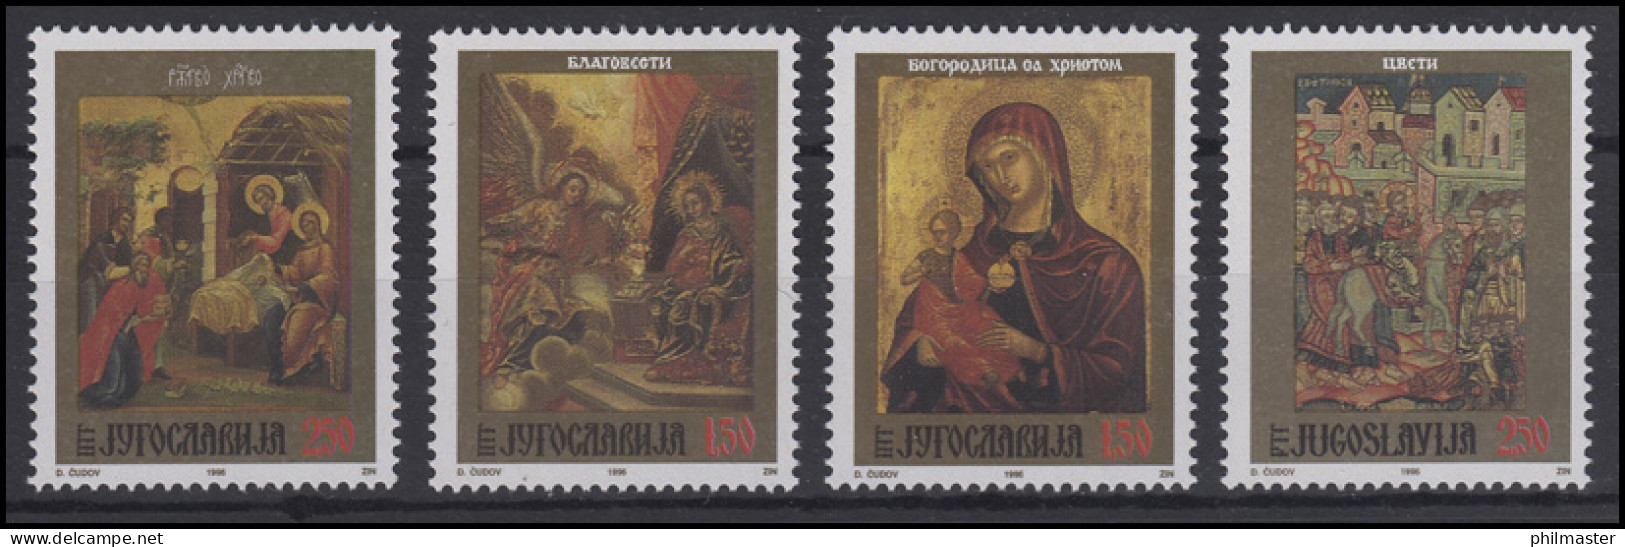 Jugoslawien: Fresken & Wandmalereien - Heilige 1996, 4 Werte, Satz **  - Christentum